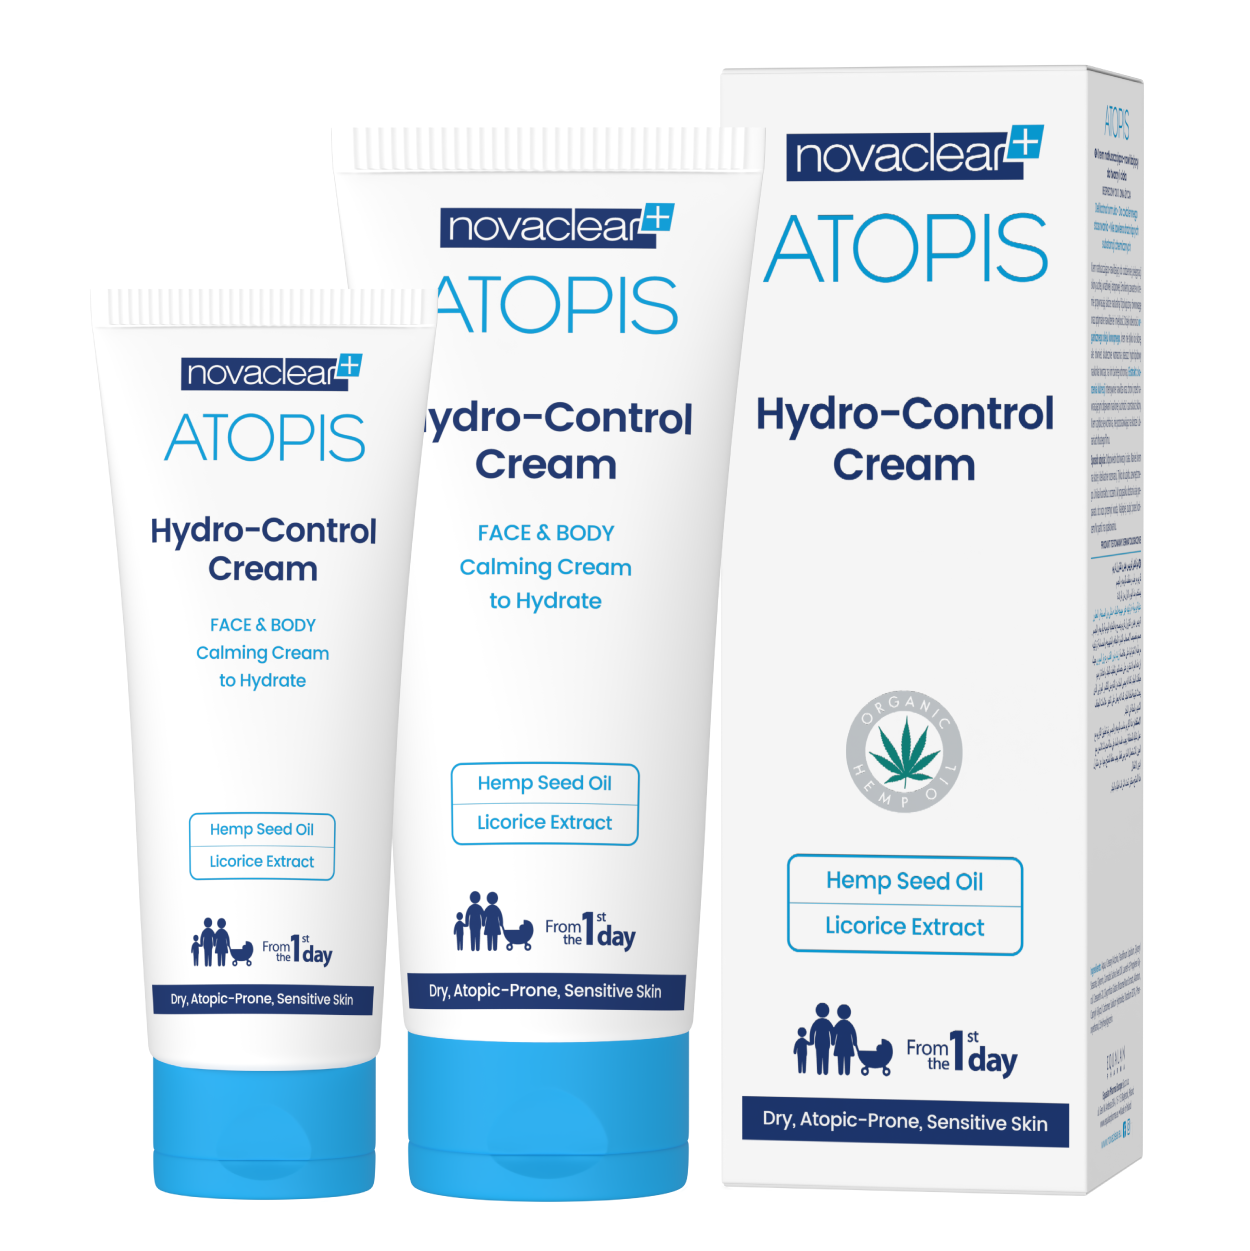 novaclear-atopis-hydro-control-cream